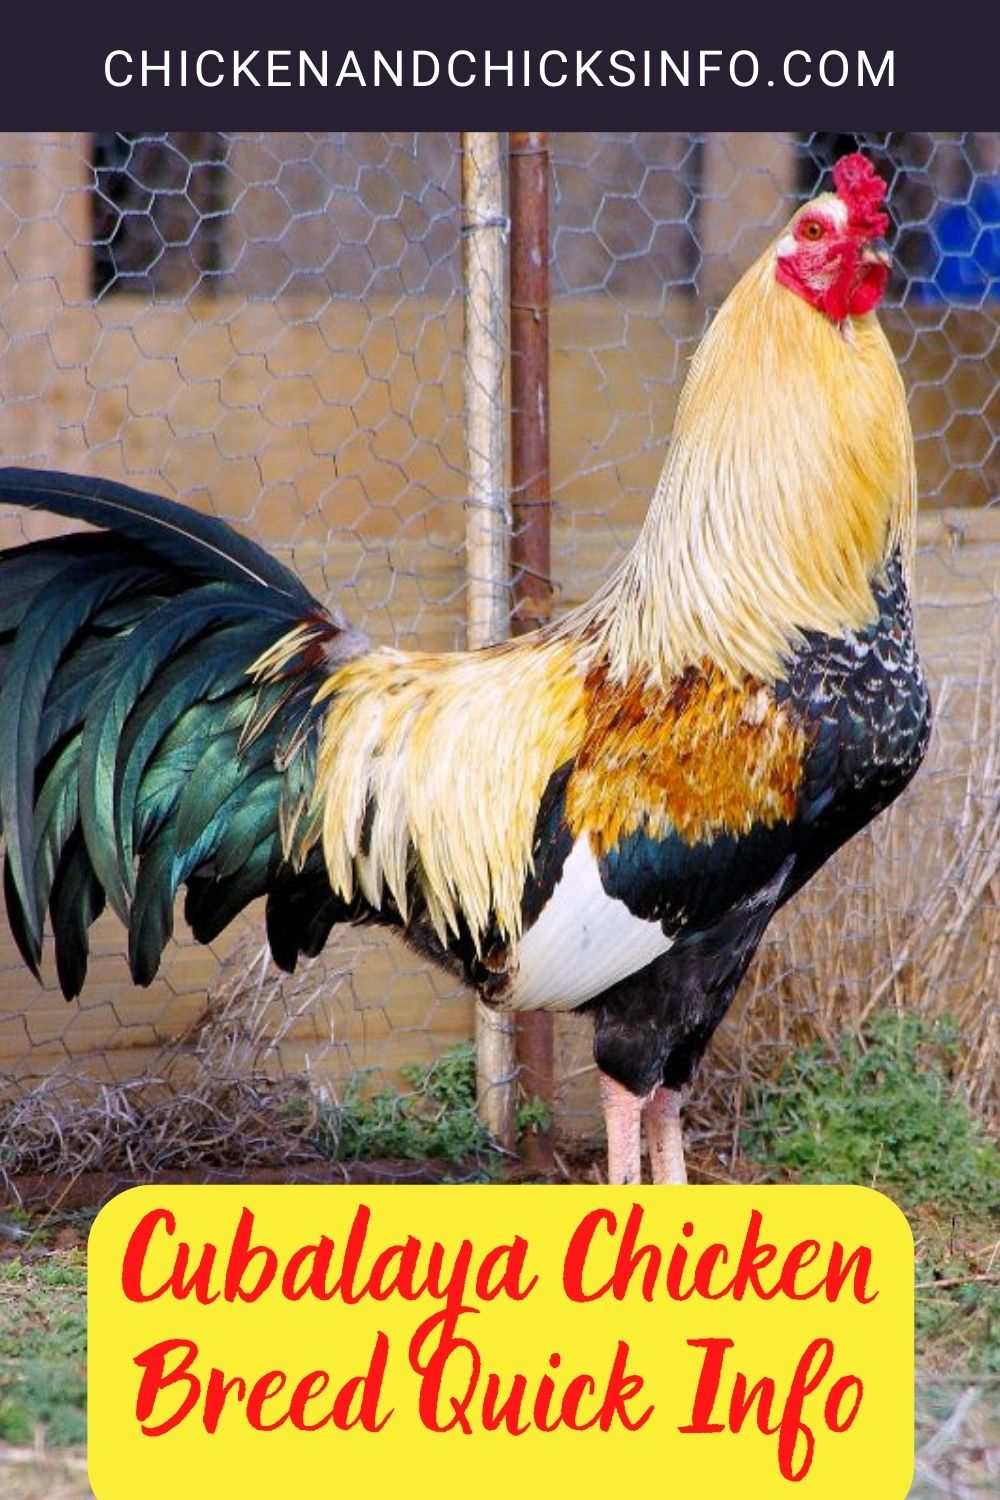 Cubalaya Chicken Breed Quick Info + Where to Buy pinterest image.